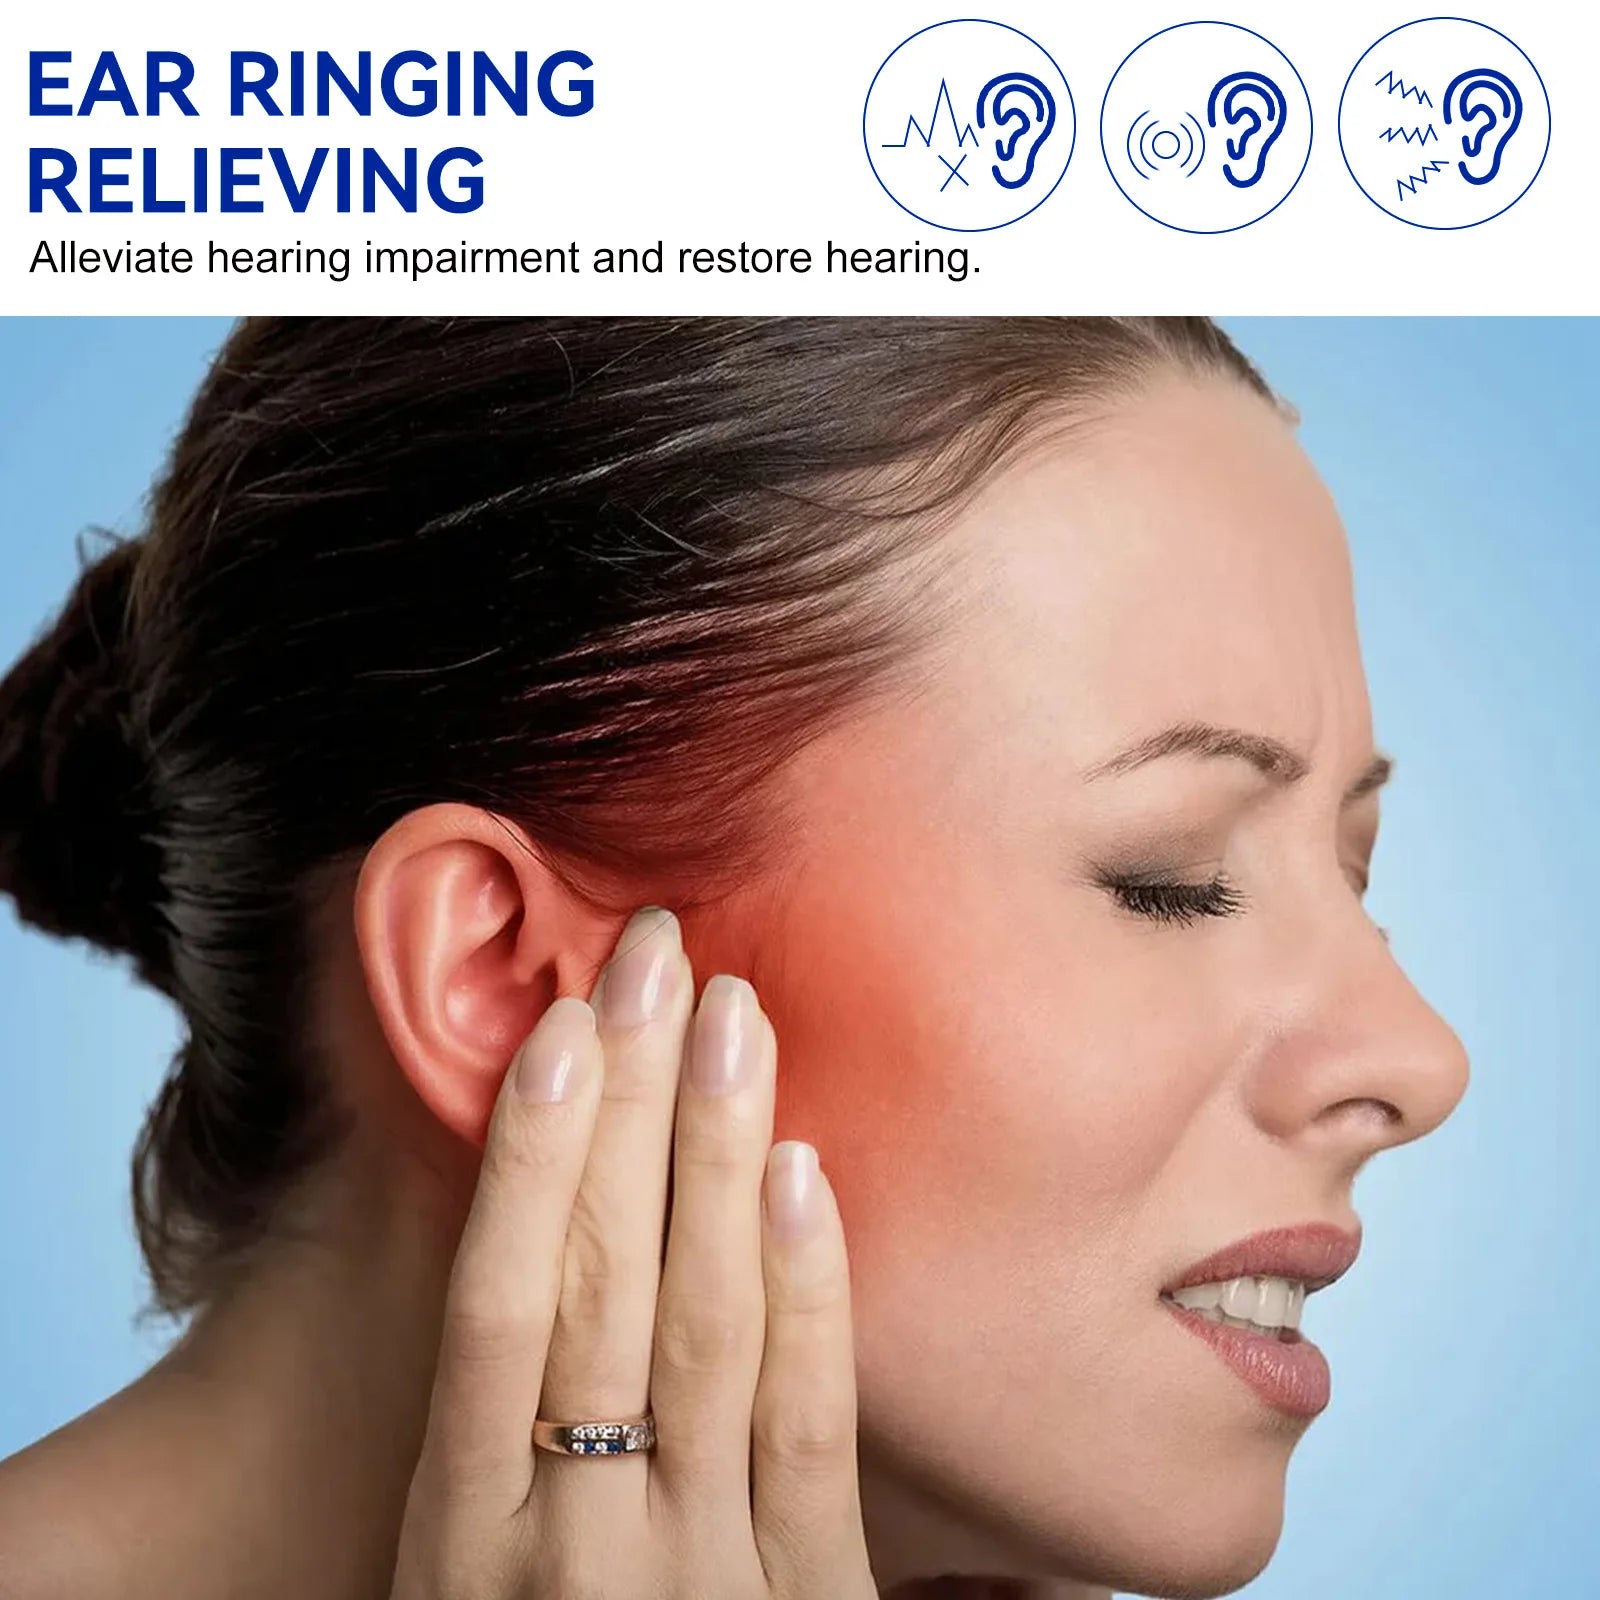 60Ml Tinnitus Relief Spray Clean Ear Canal Blockage Improve Listening Tinnitus Deafness Sore Relief Ear Cleaning Liquid